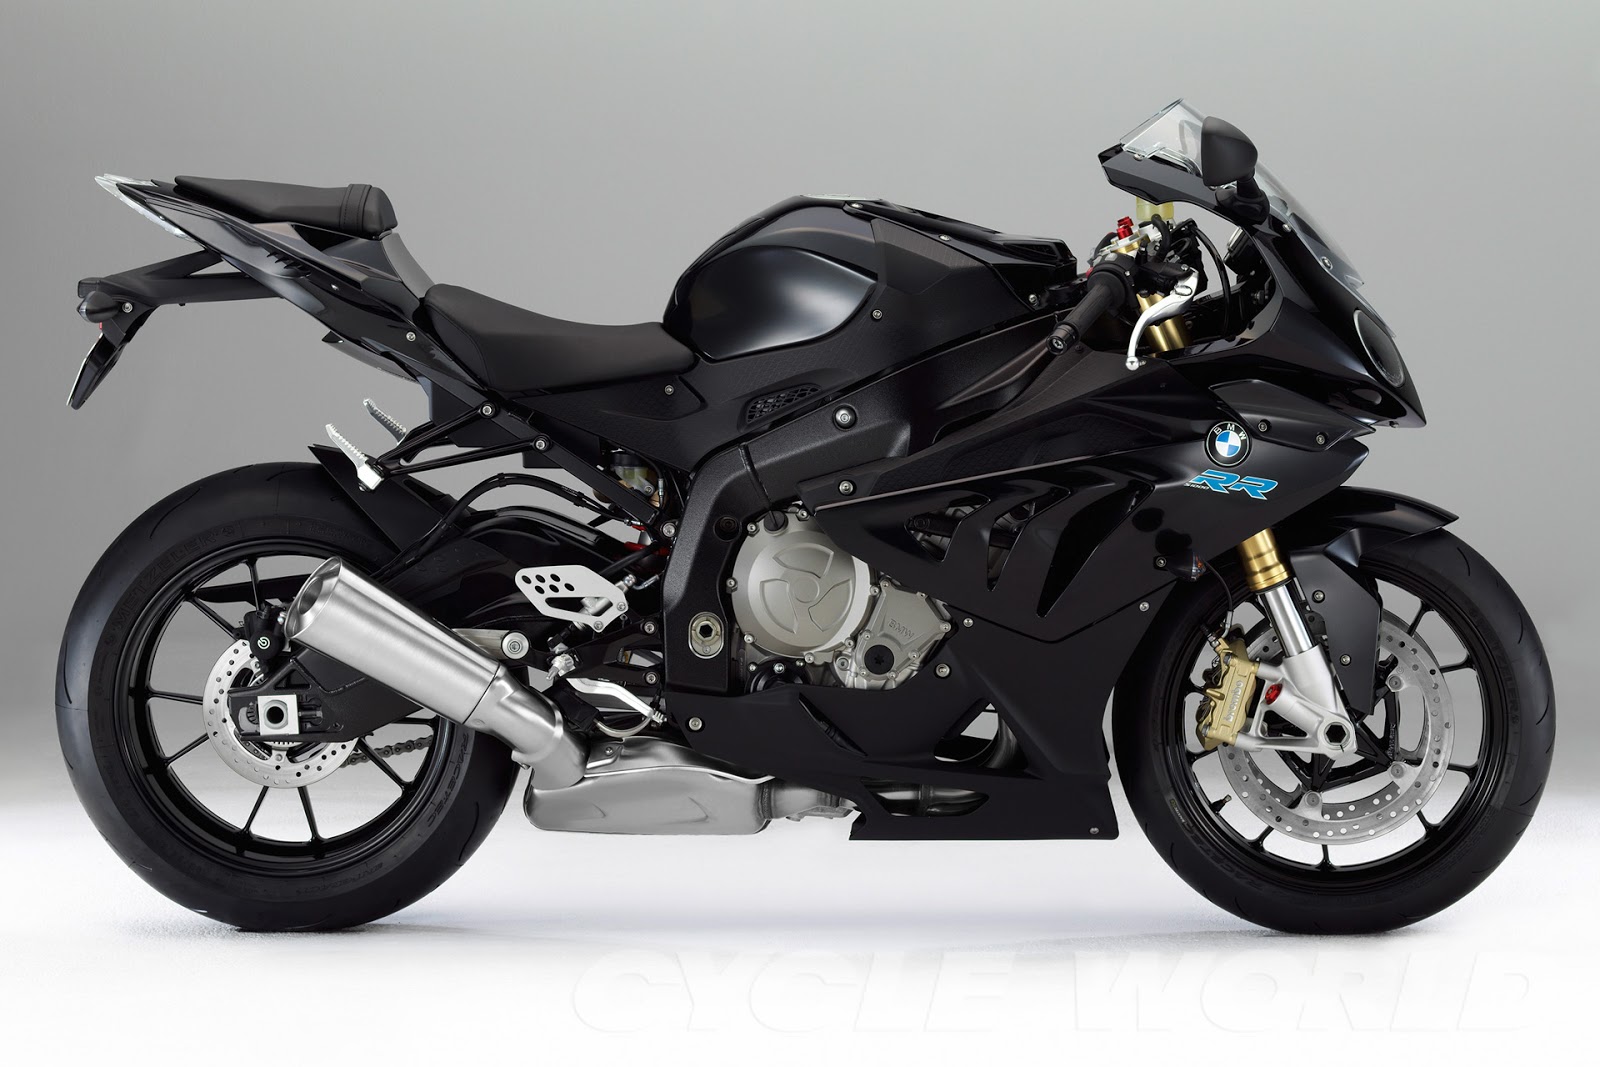 Latest Motorcycles Picturez: 2013 BMW S1000RR Image Review